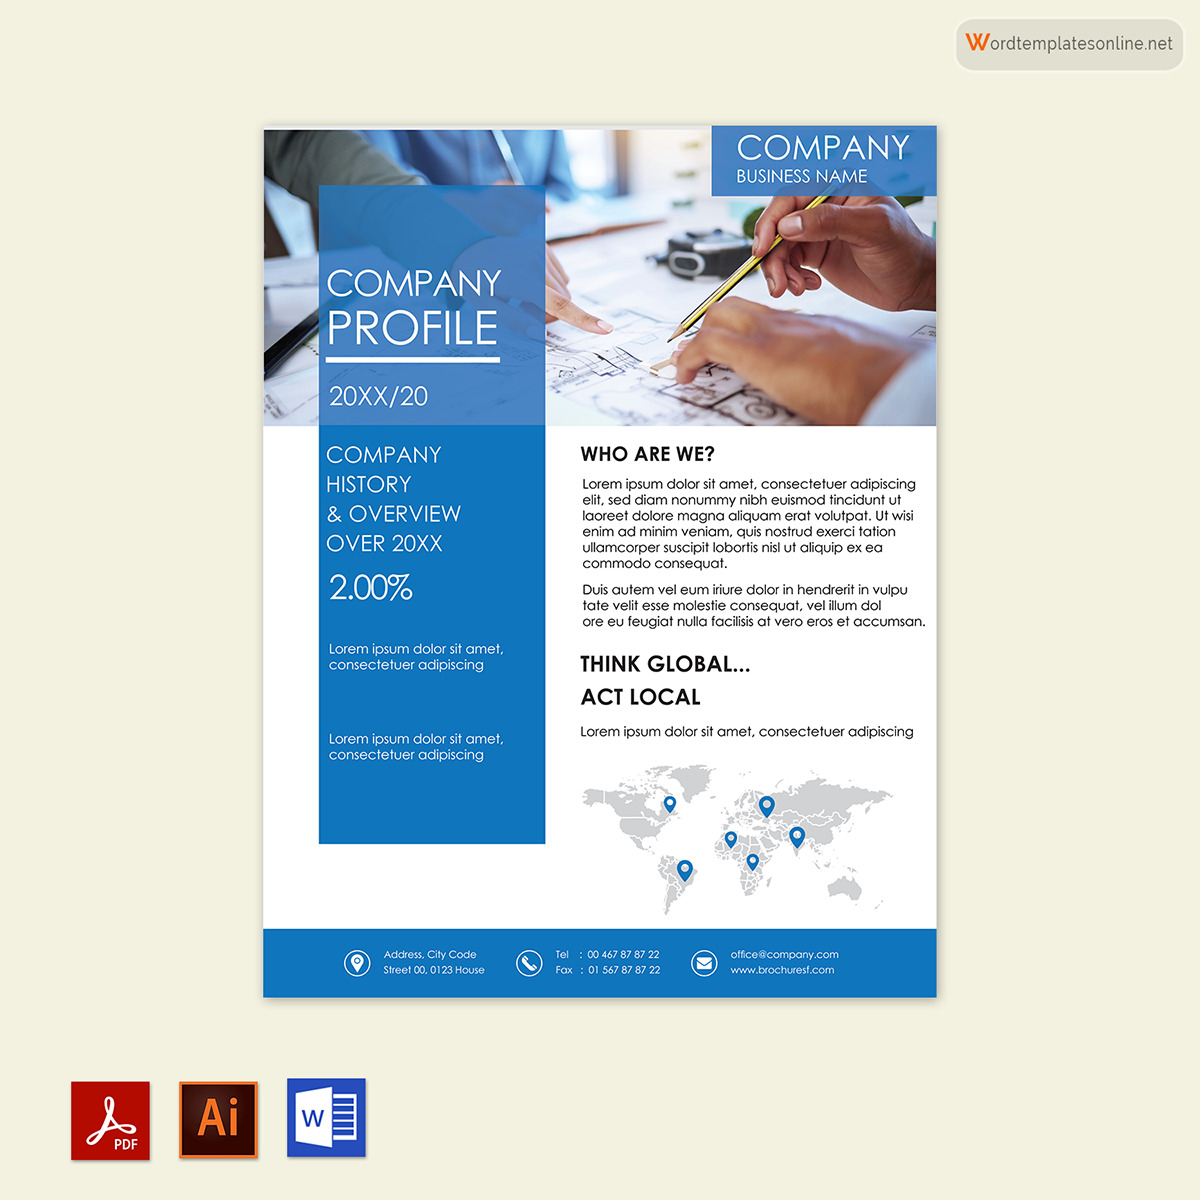 Editable Company Profile Template - Free Sample in Word, PDF, Adobe Illustrator 01